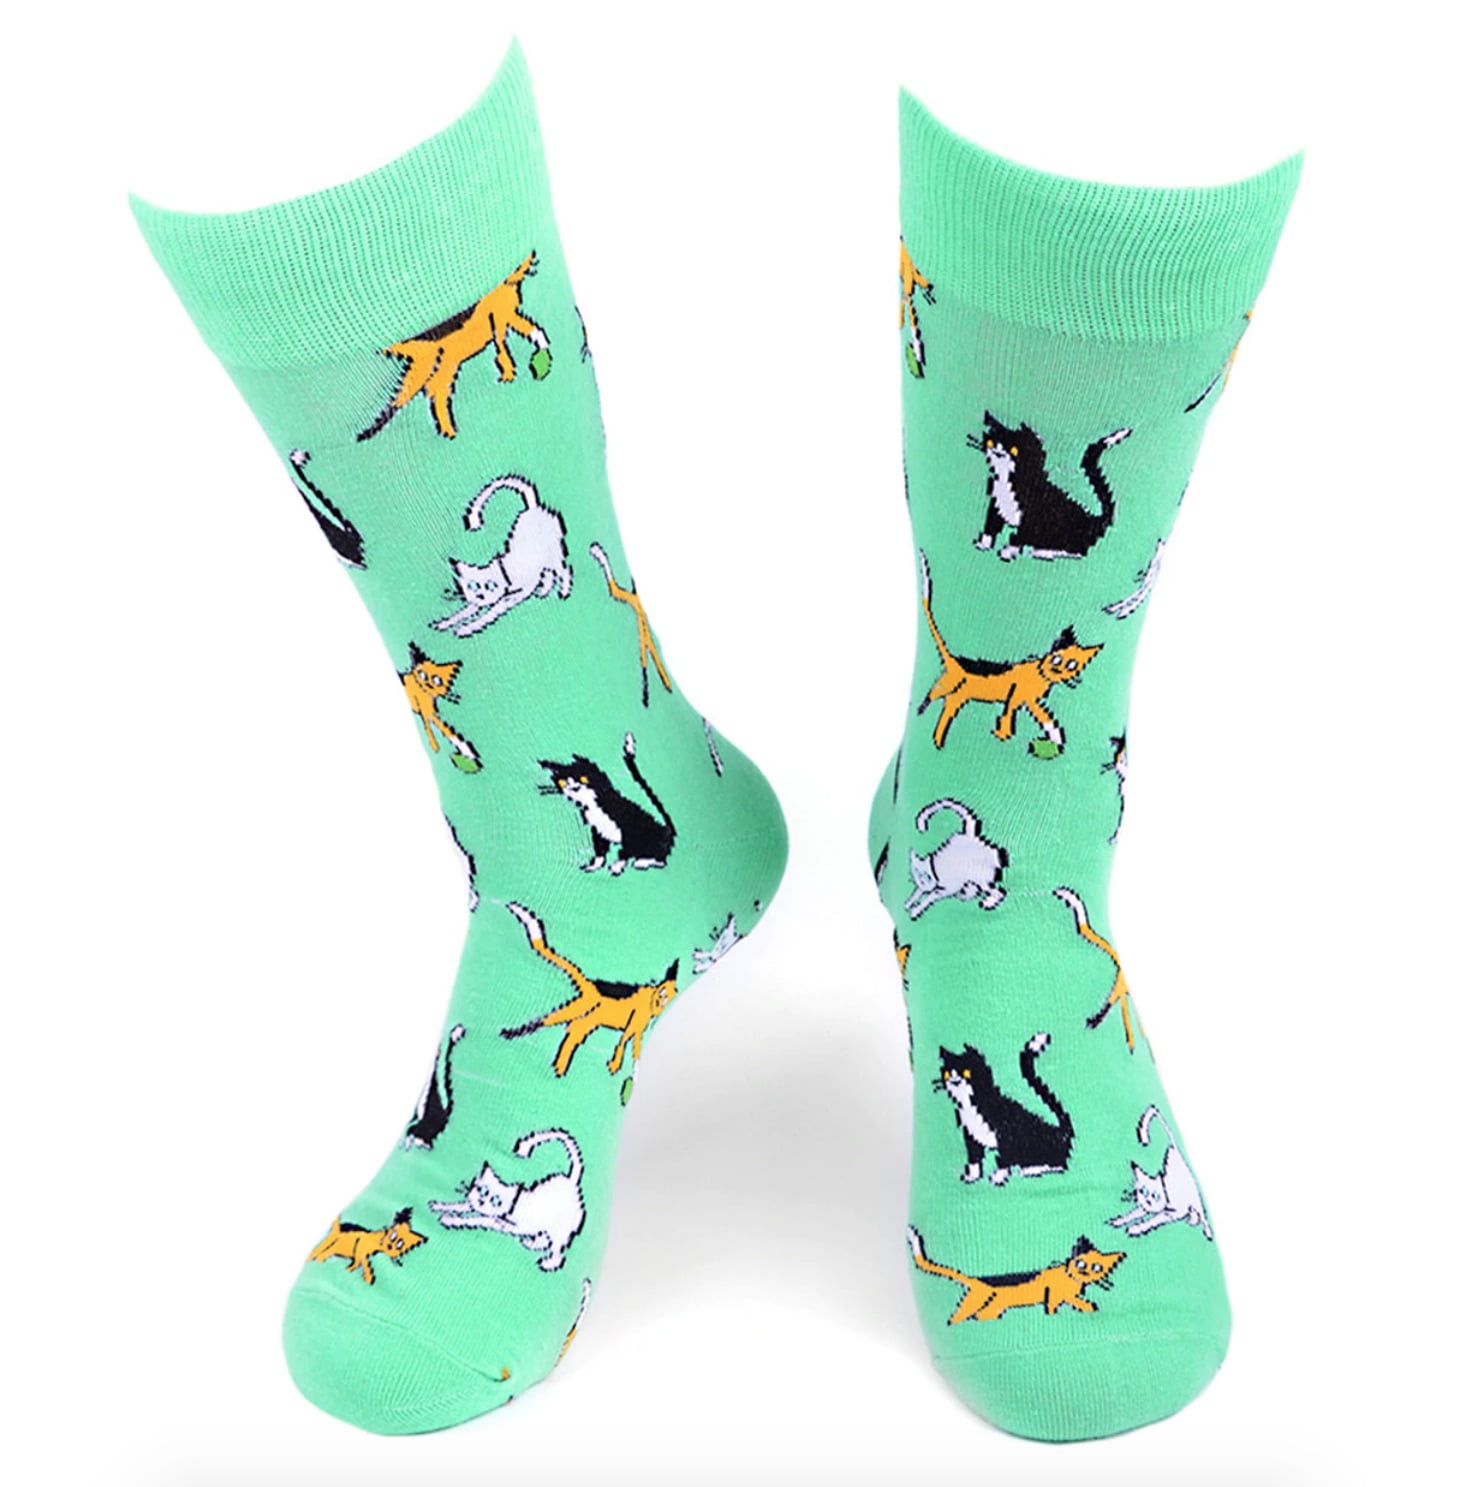 Designed fun Men's Fox Cotton Dress Socks-groomsmen socks-men\u2019s happy socks-Funky socks for him-Father's gift idea-Crew Socks